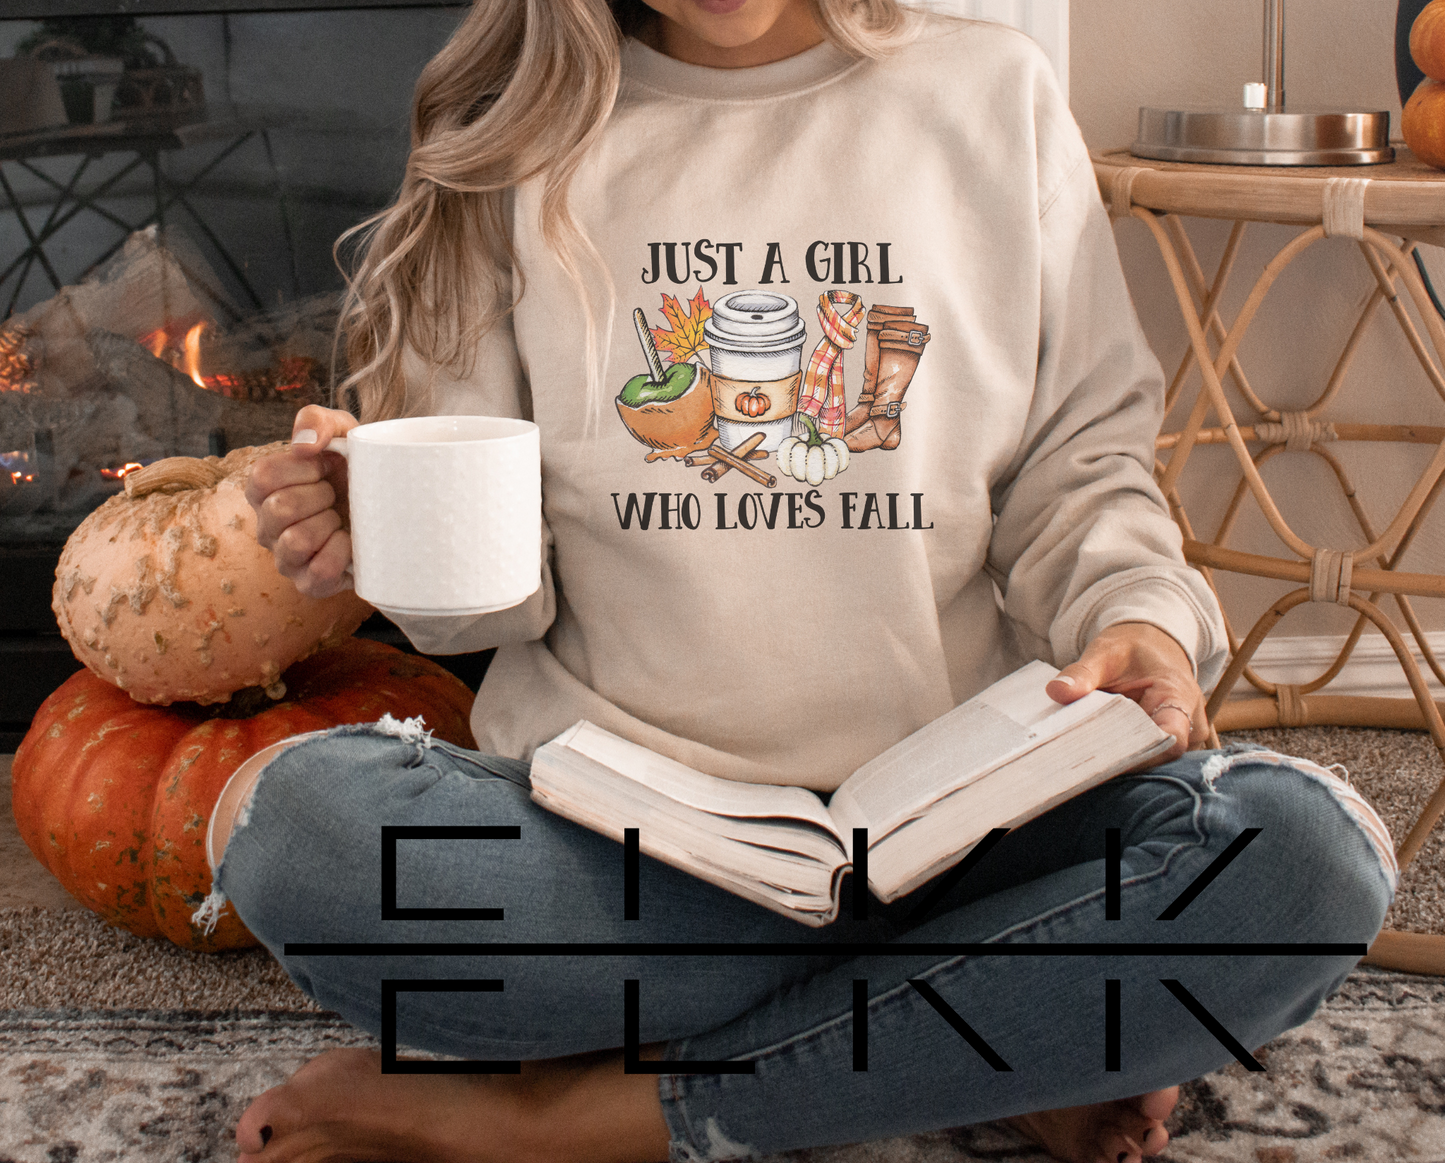 Just a girl sweatshirt